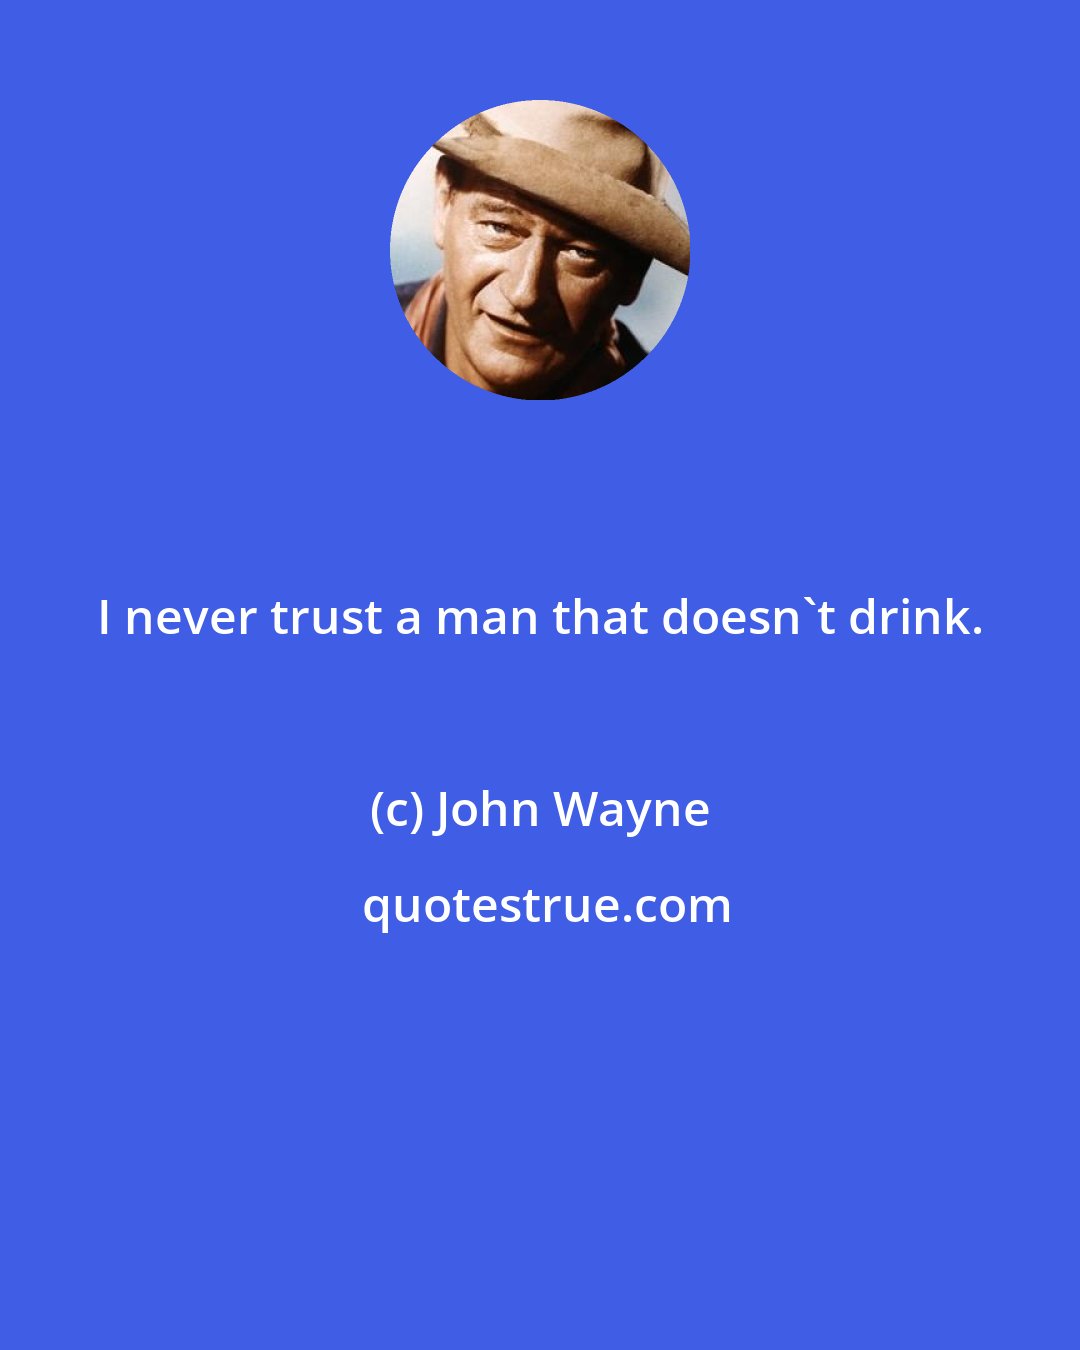 John Wayne: I never trust a man that doesn't drink.